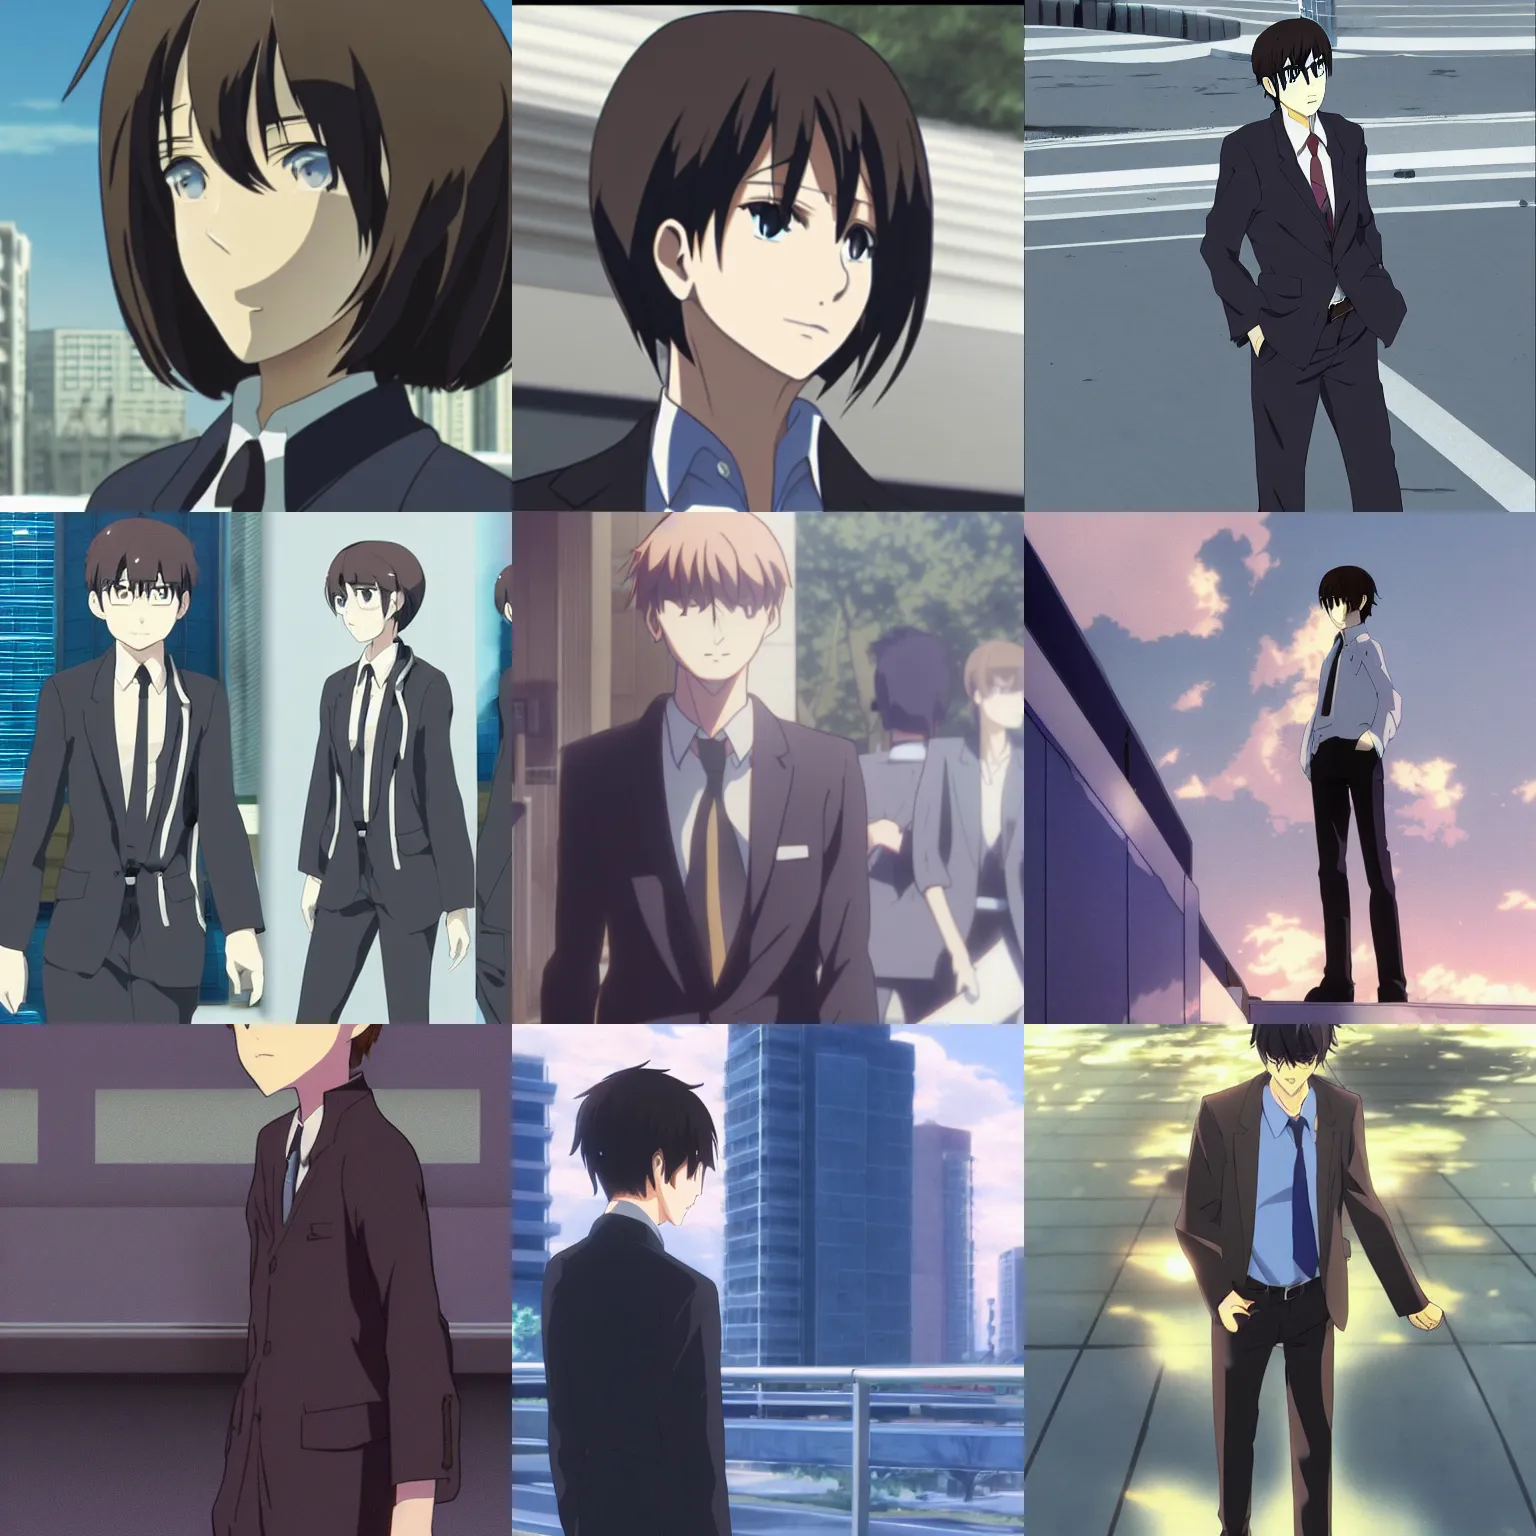 Prompt: FBI agent, from the anime film by makoto shinkai